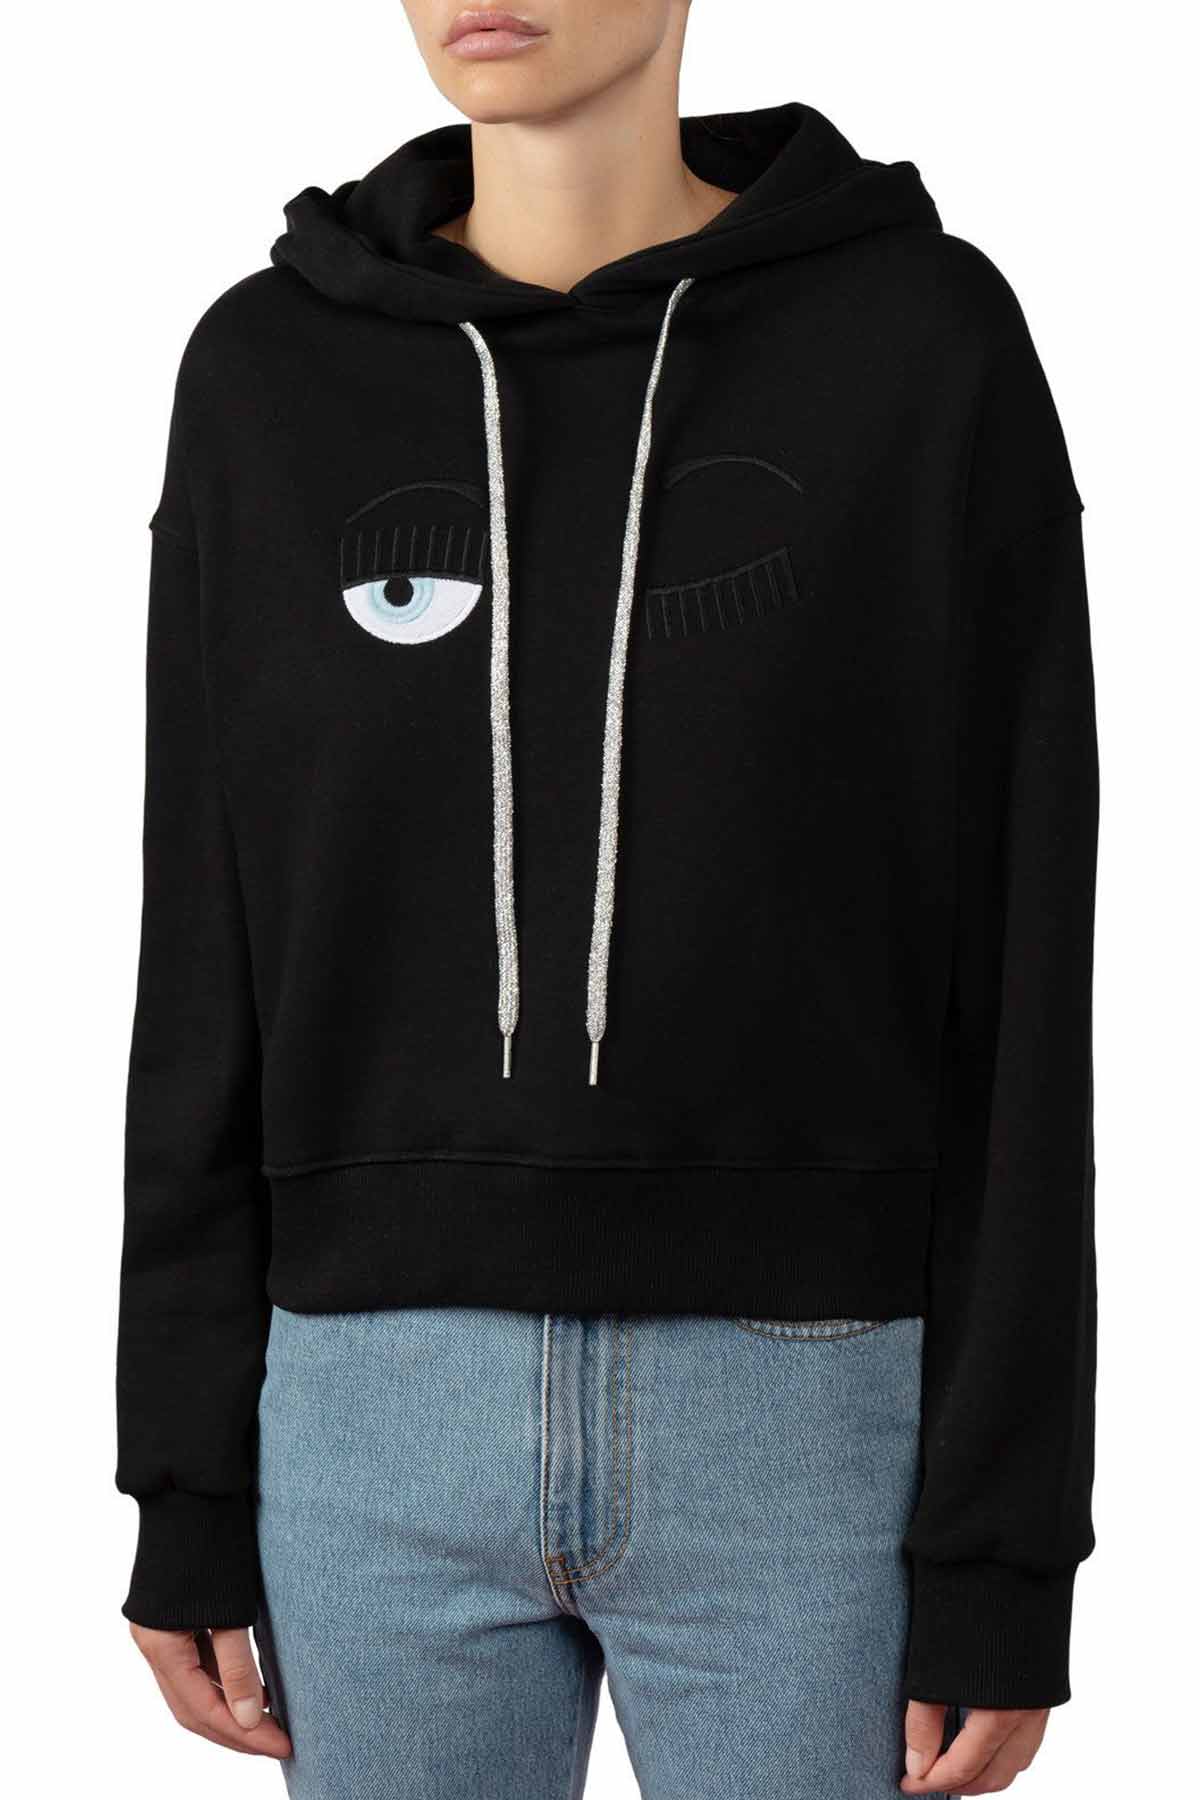 Chiara Ferragni Winking Eye Kapüşonlu Sweatshirt-Libas Trendy Fashion Store